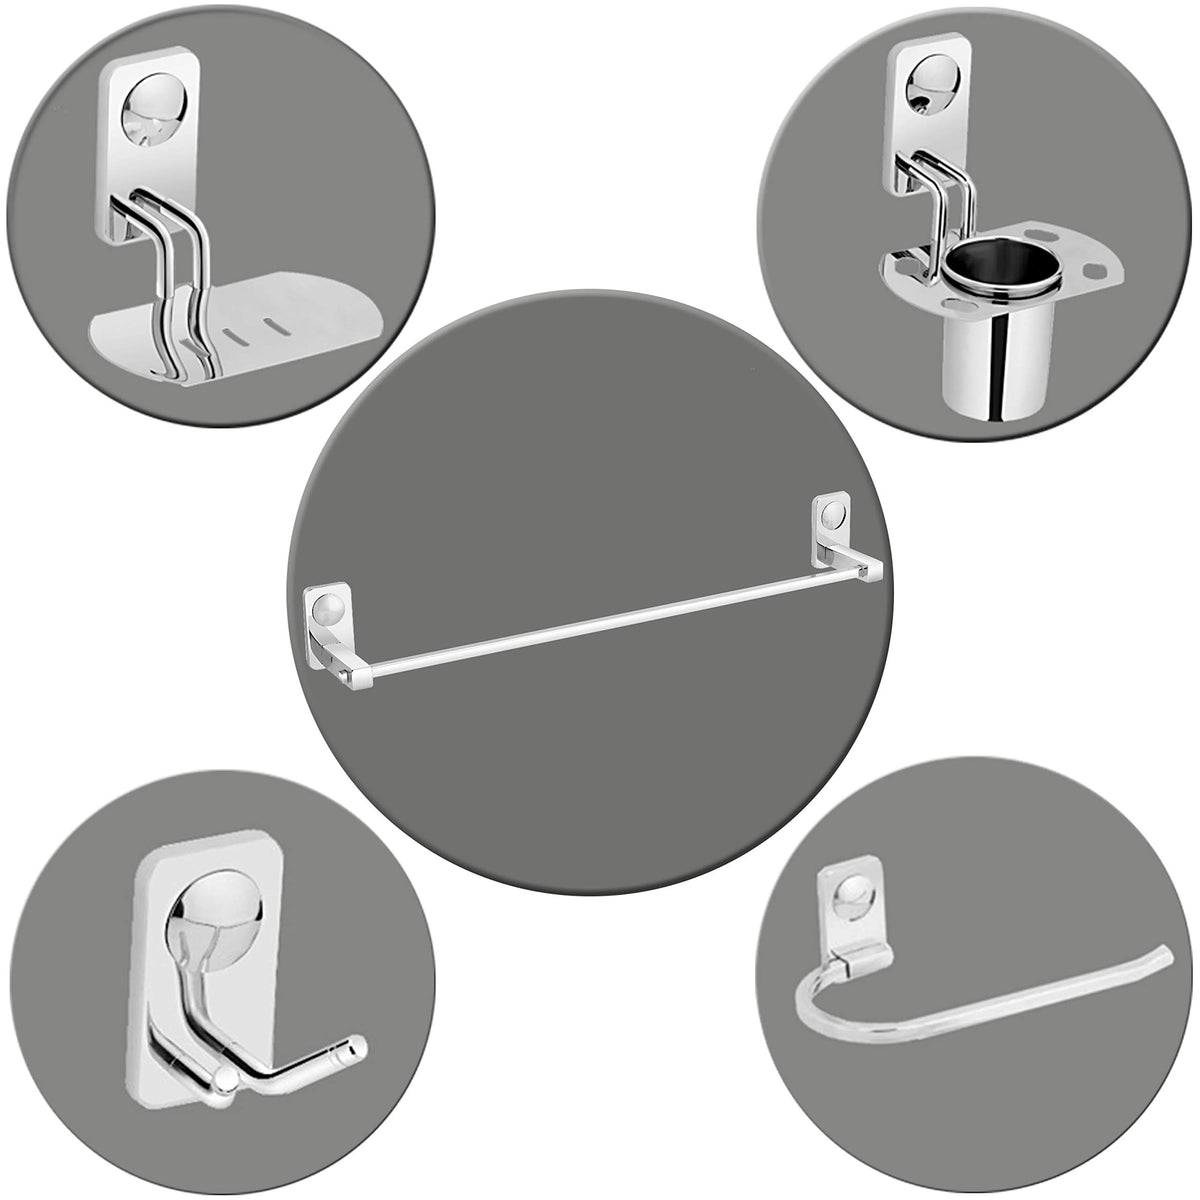 Plantex Stainless Steel Bathroom Accessories Set/Bathroom Hanger for Towel/Towel Bar/Napkin Ring/Tumbler Holder/Soap Dish/Robe Hook (Pack of 5)